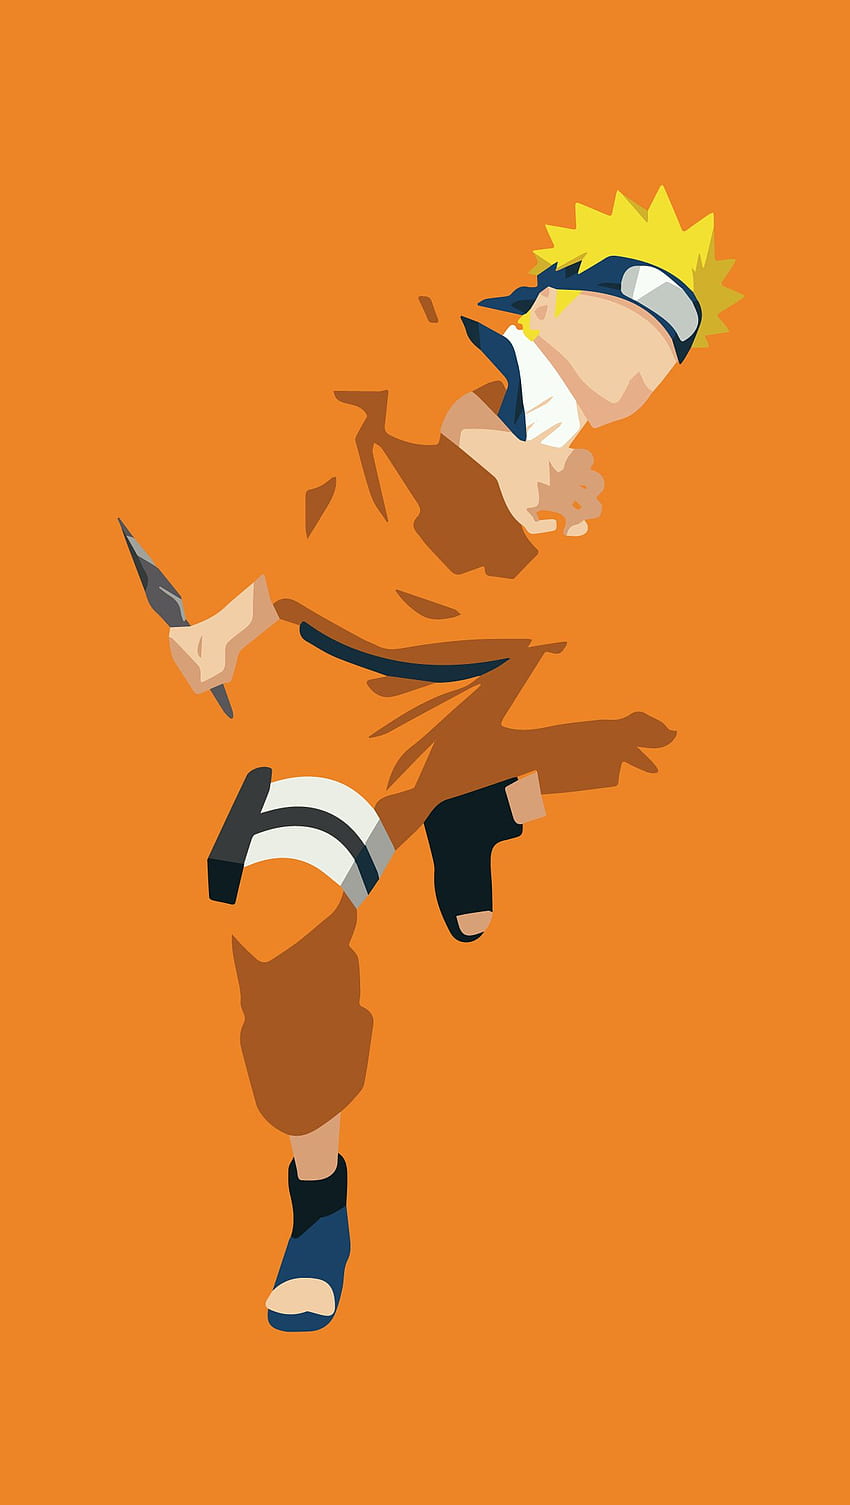 100+] Orange Anime Wallpapers | Wallpapers.com